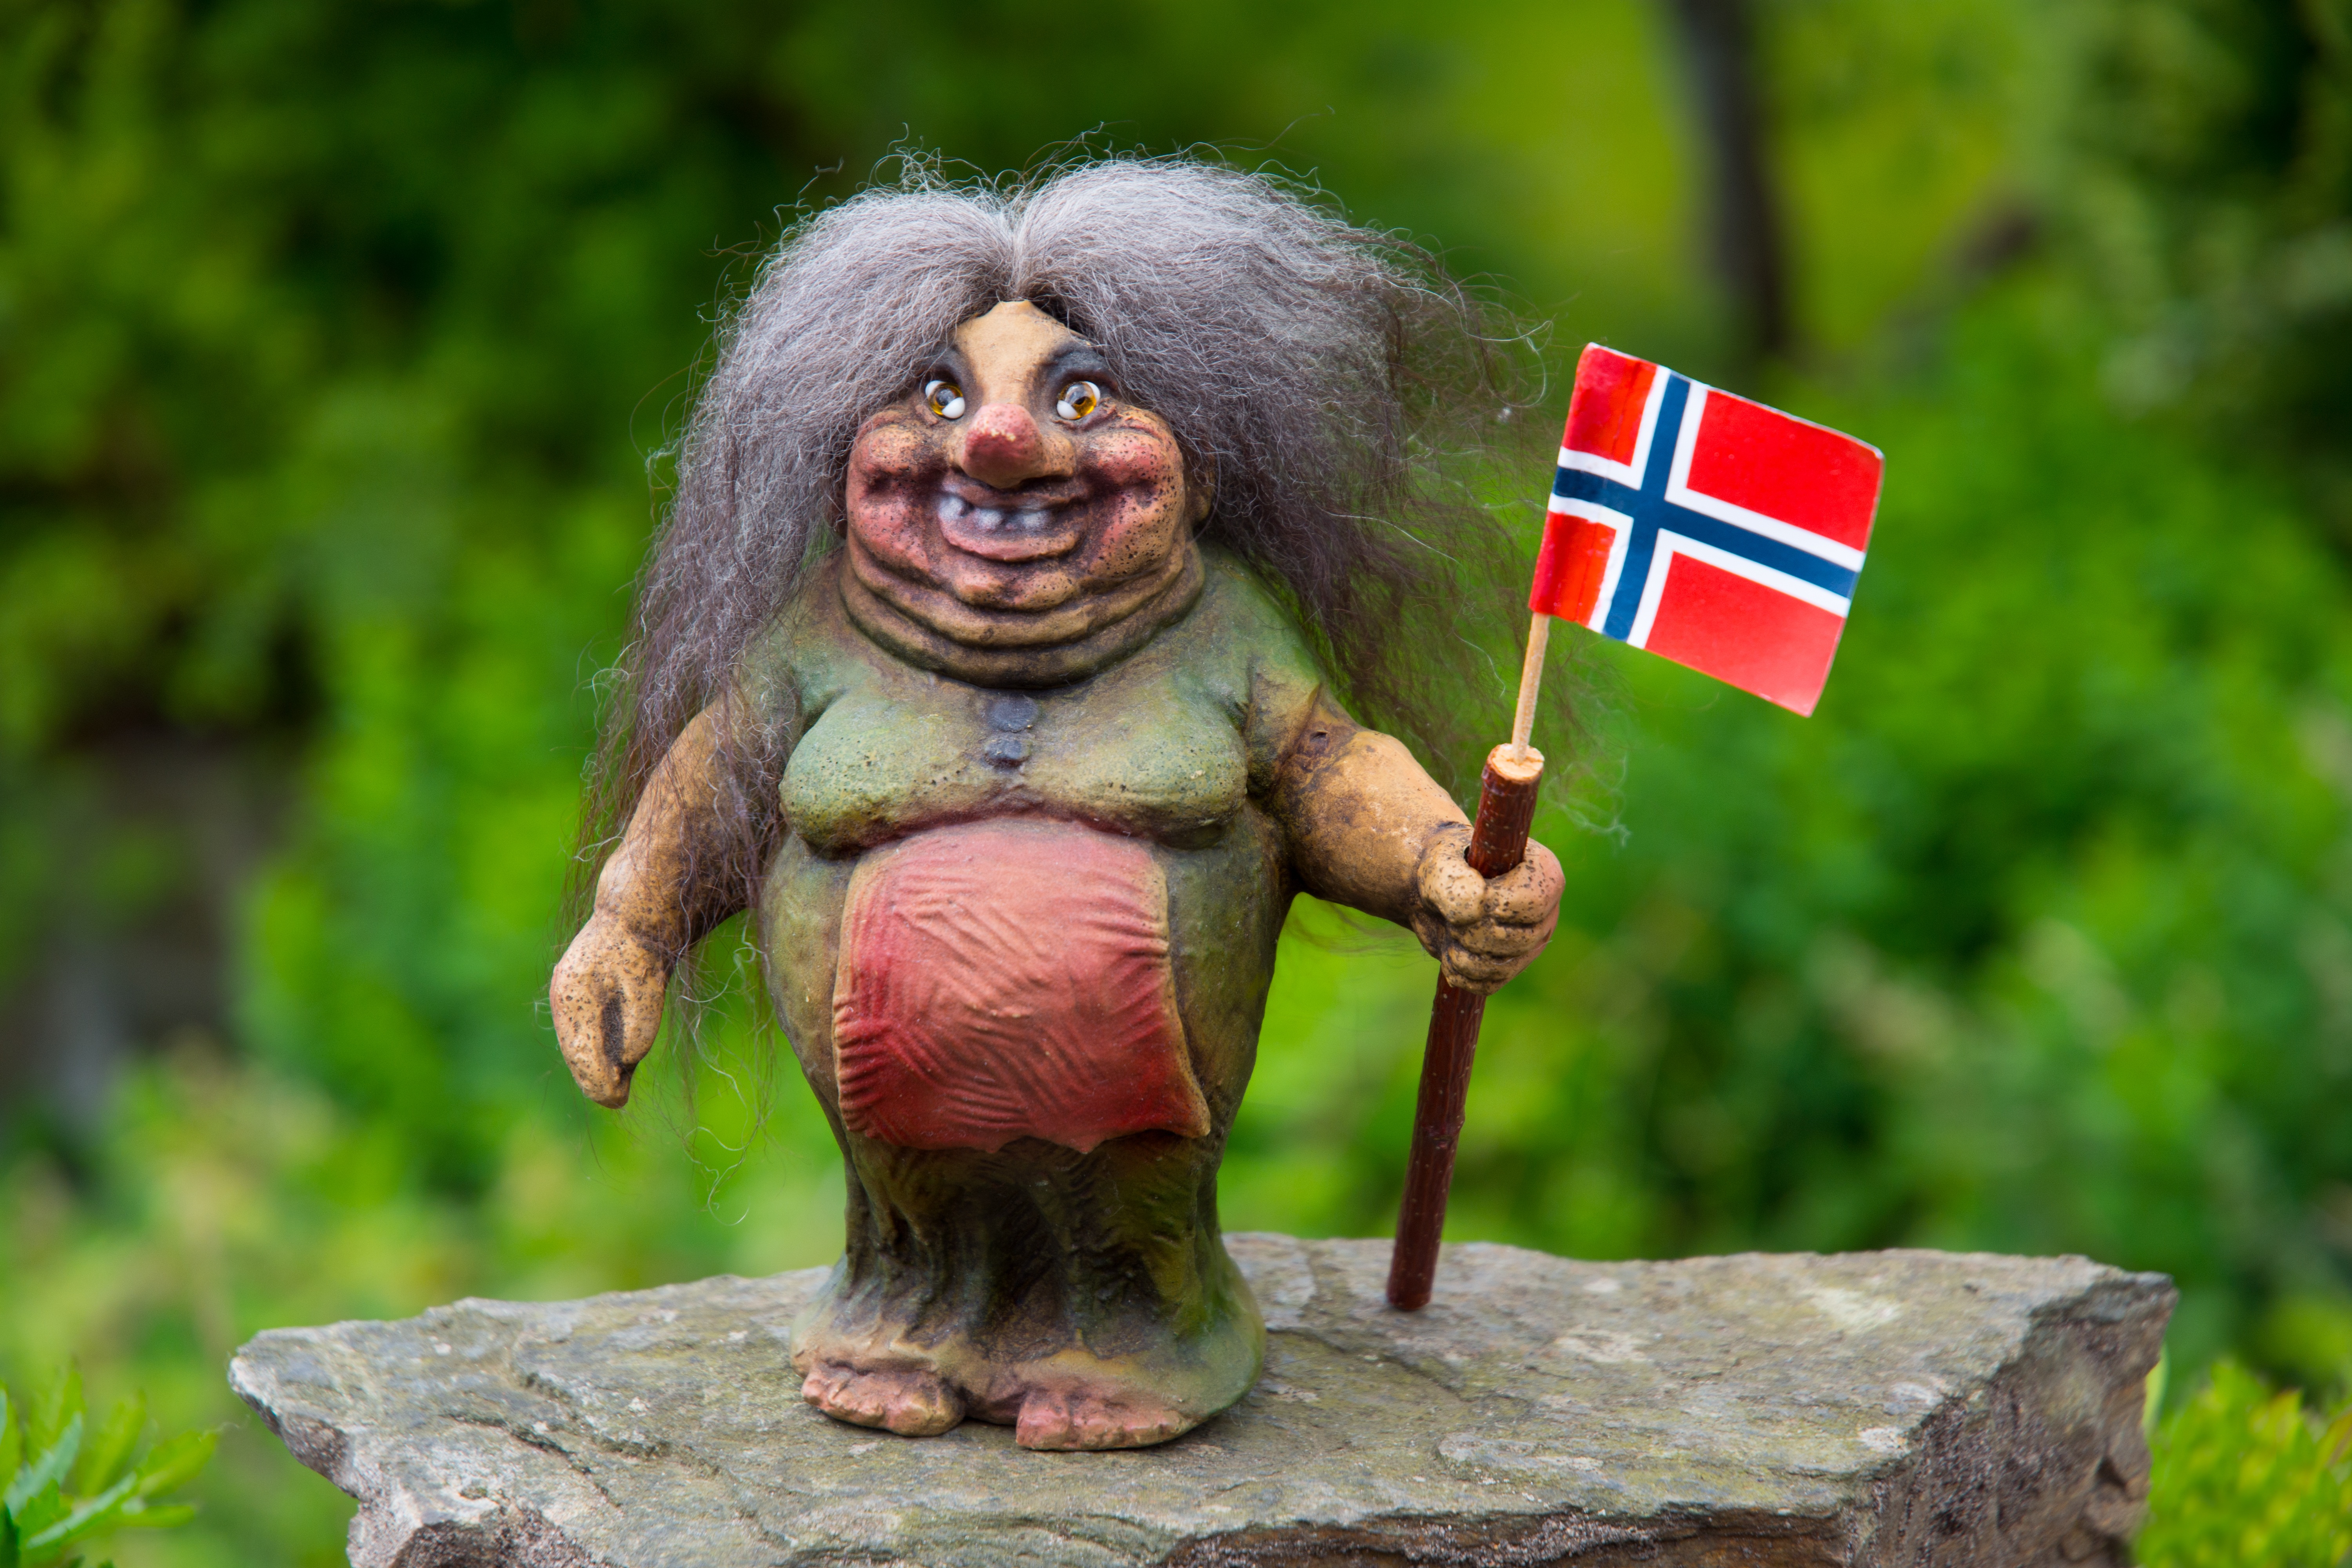 norwegiantroll